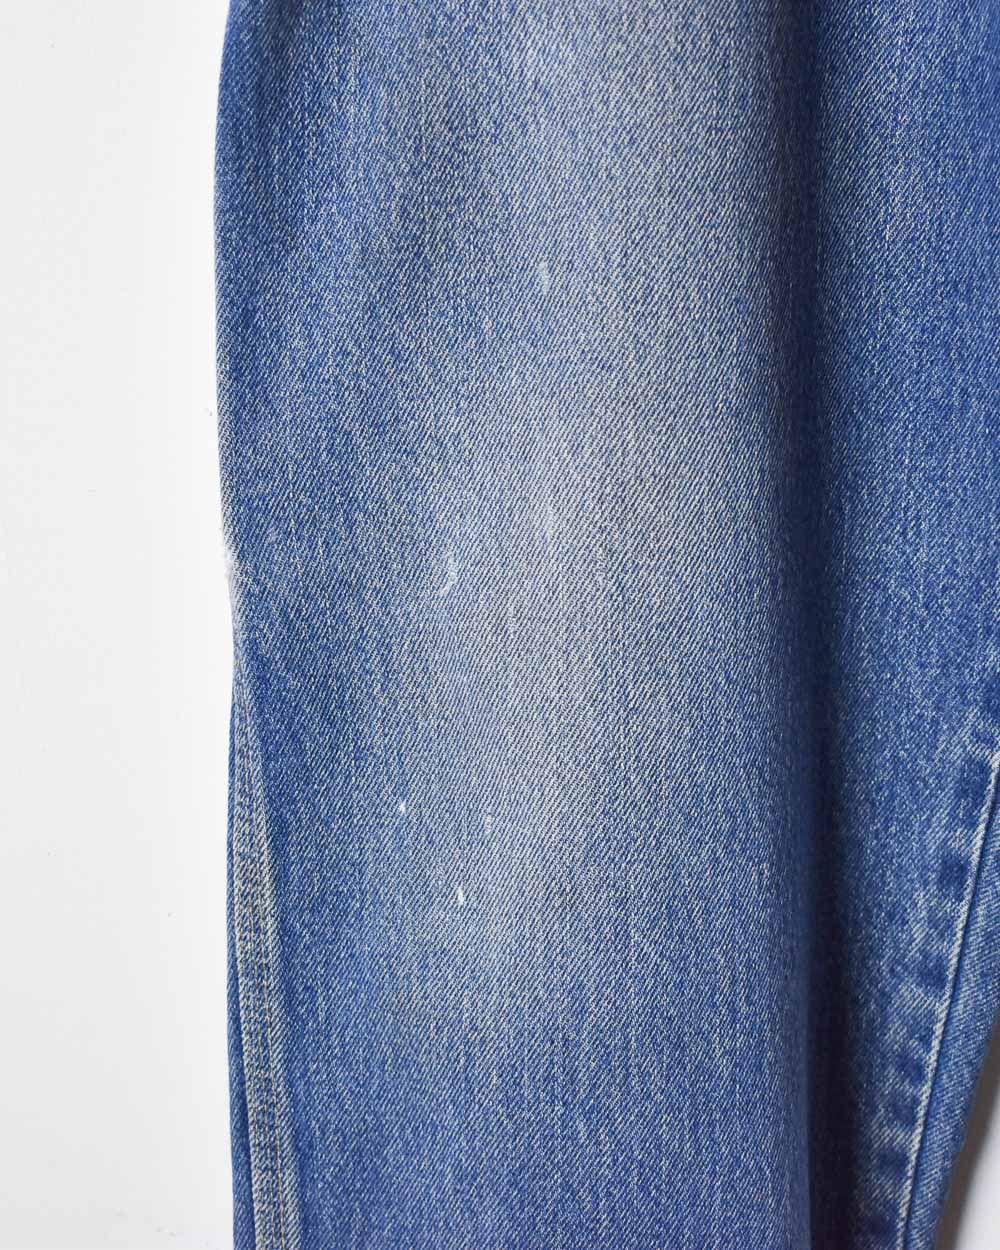 Blue Dickies Carpenter Jeans - W38 L34